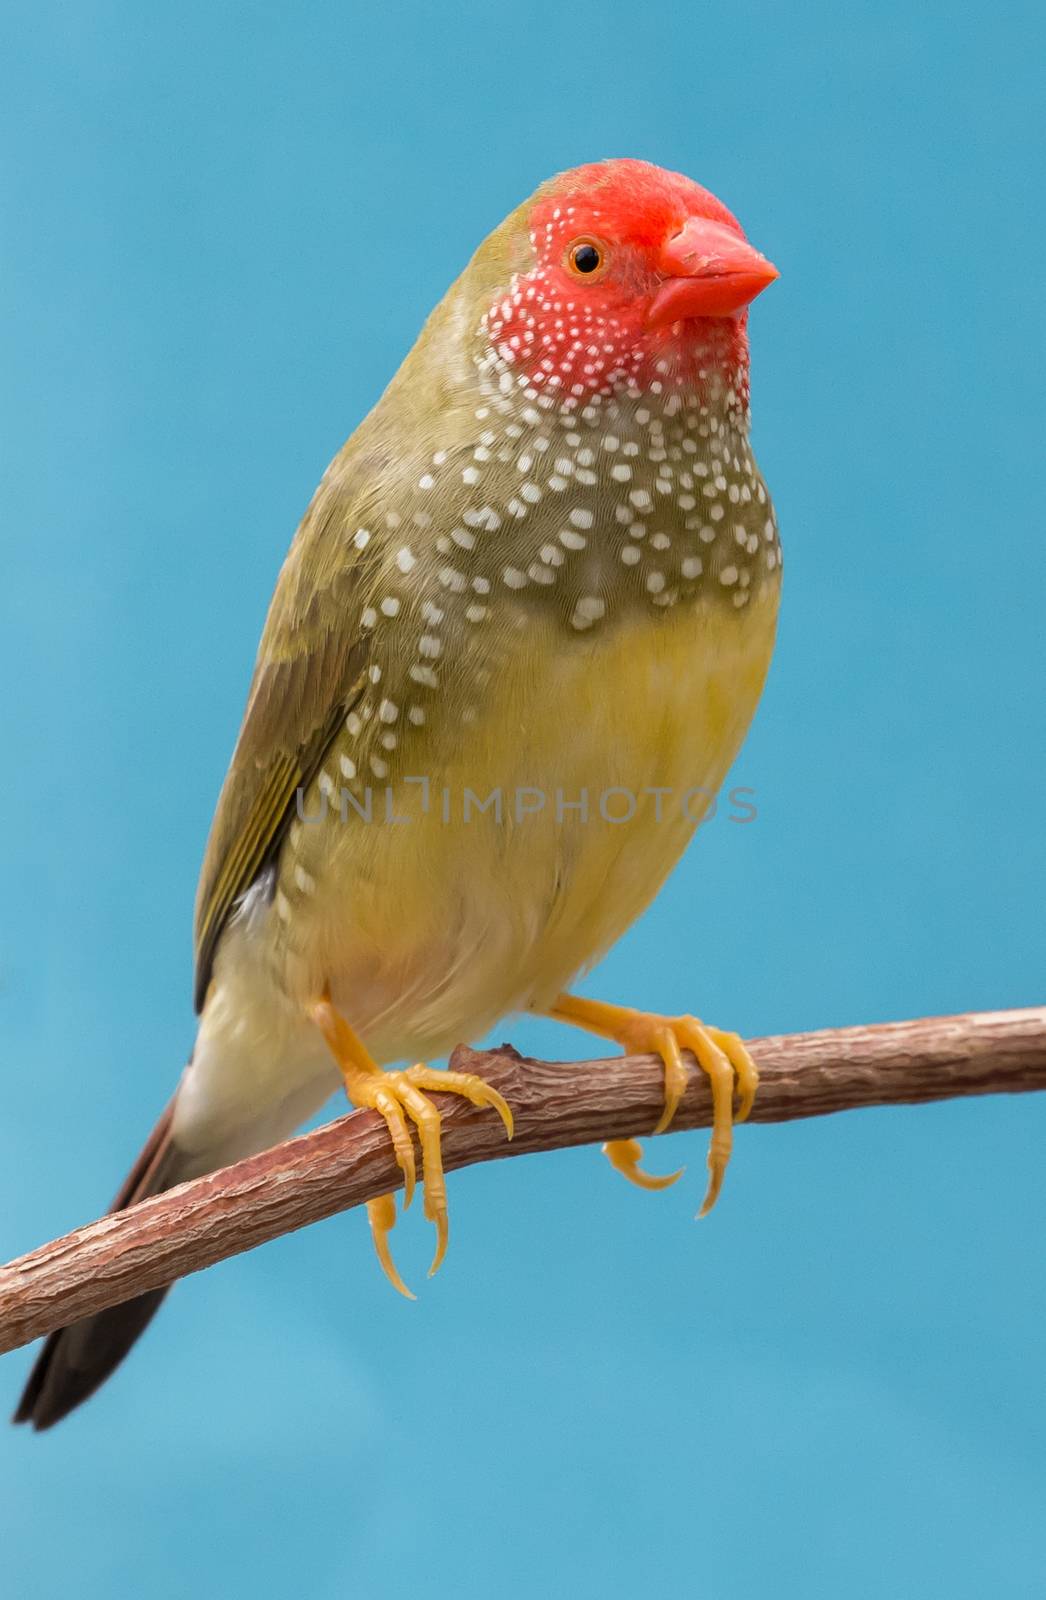 Pretty Star Finch from Australia by fouroaks